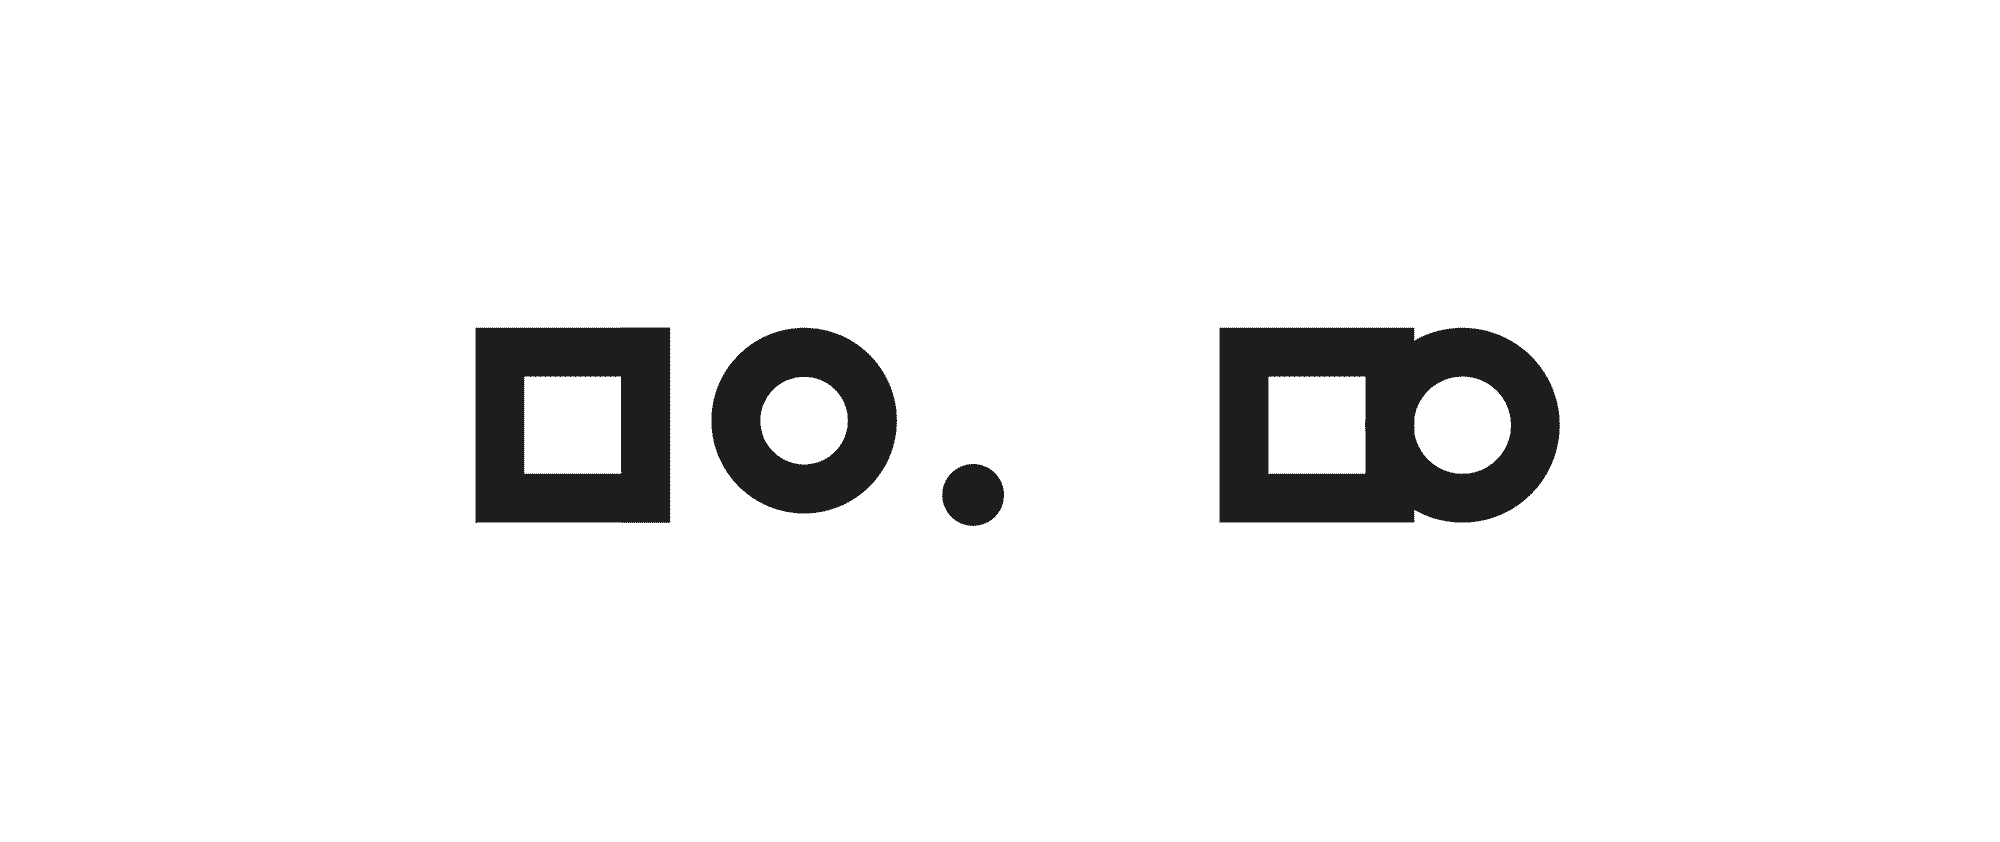 figure m logo